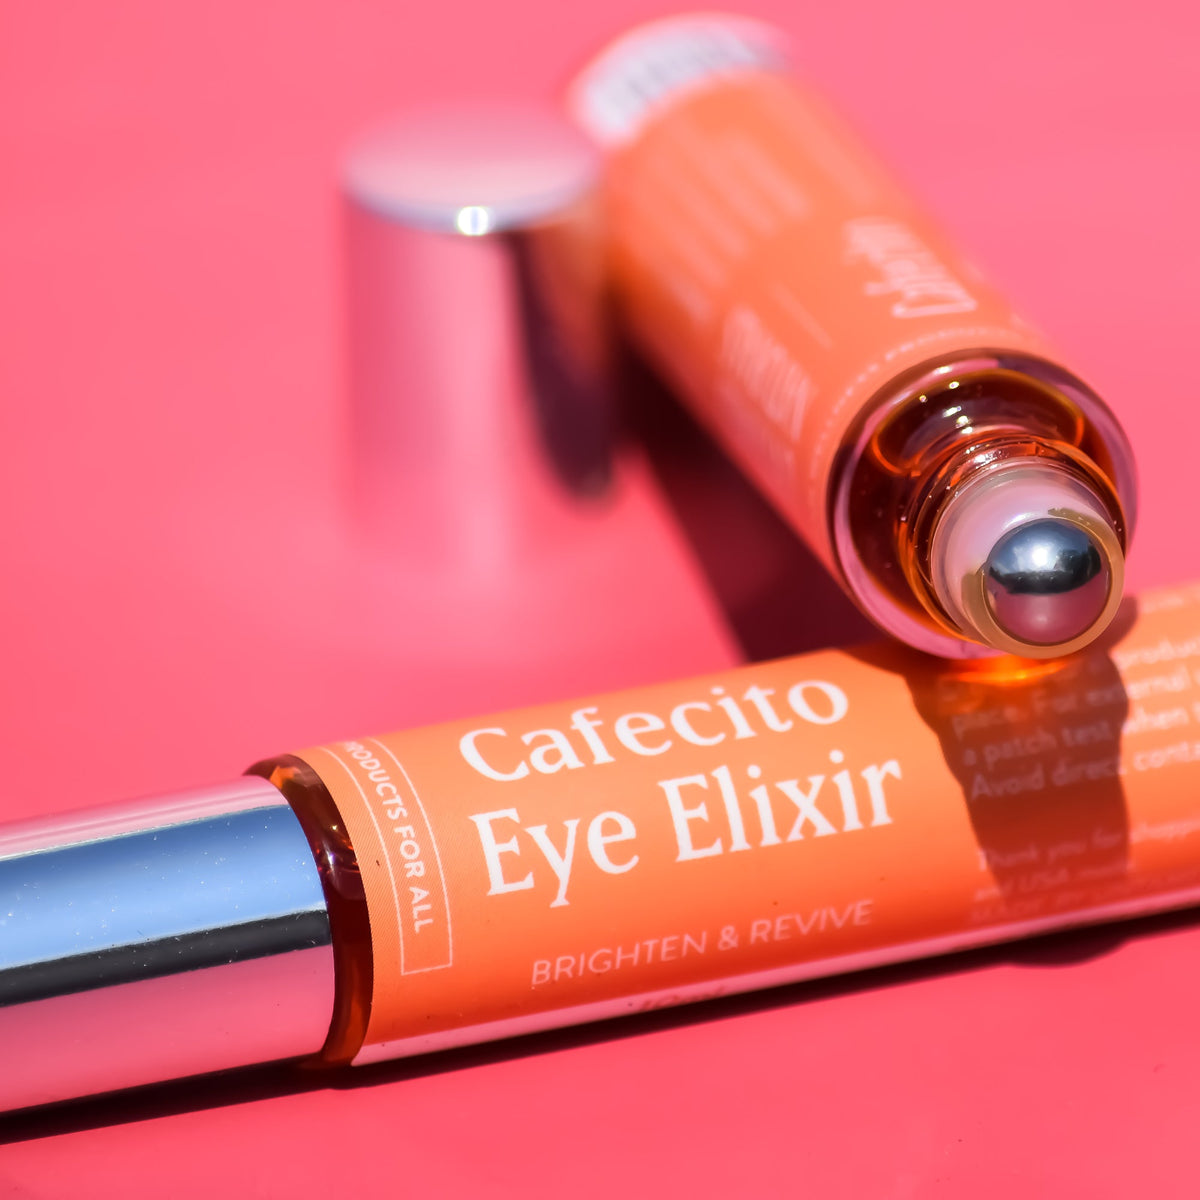 Cafecito Eye Elixir with Caffeine by UnTamed Naturals